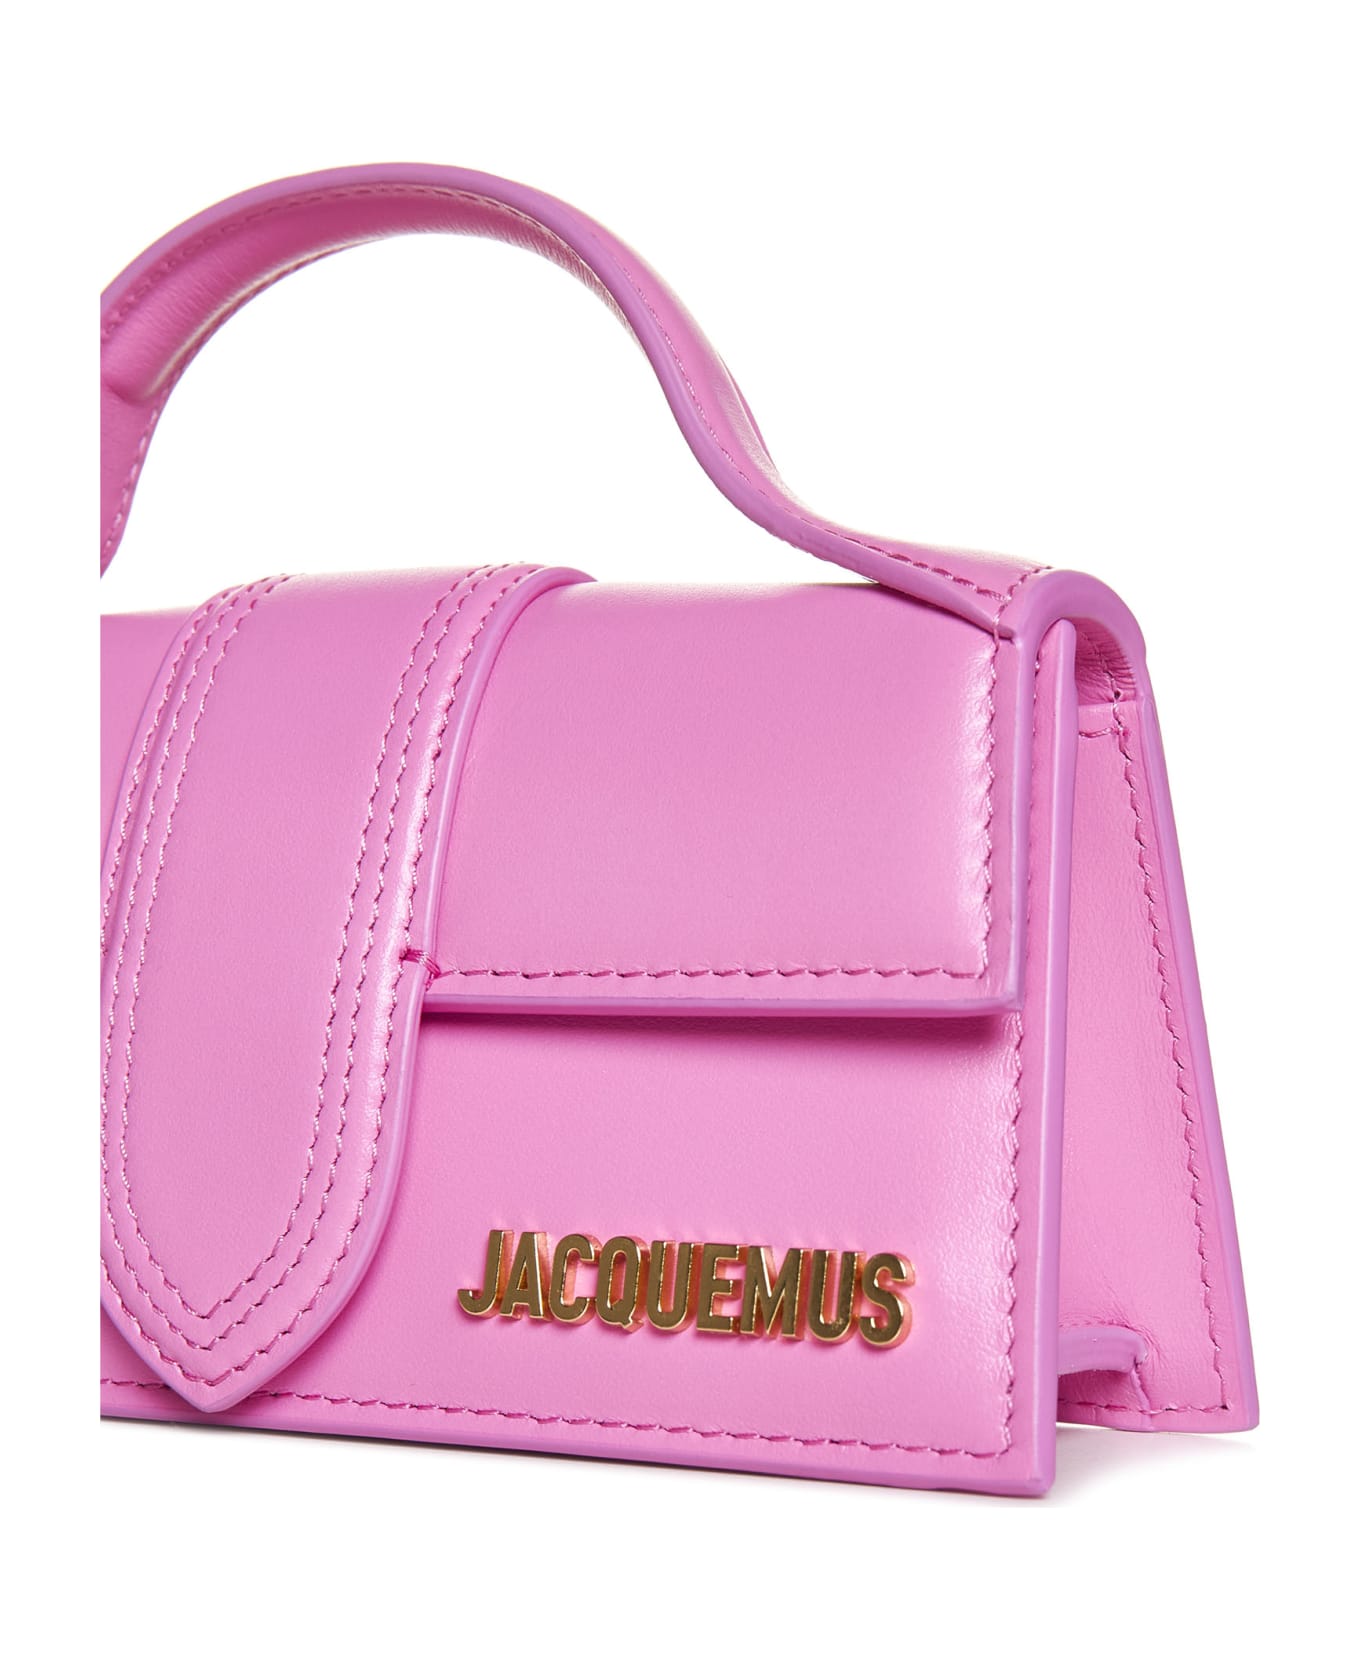 Jacquemus Tote - Neon pink